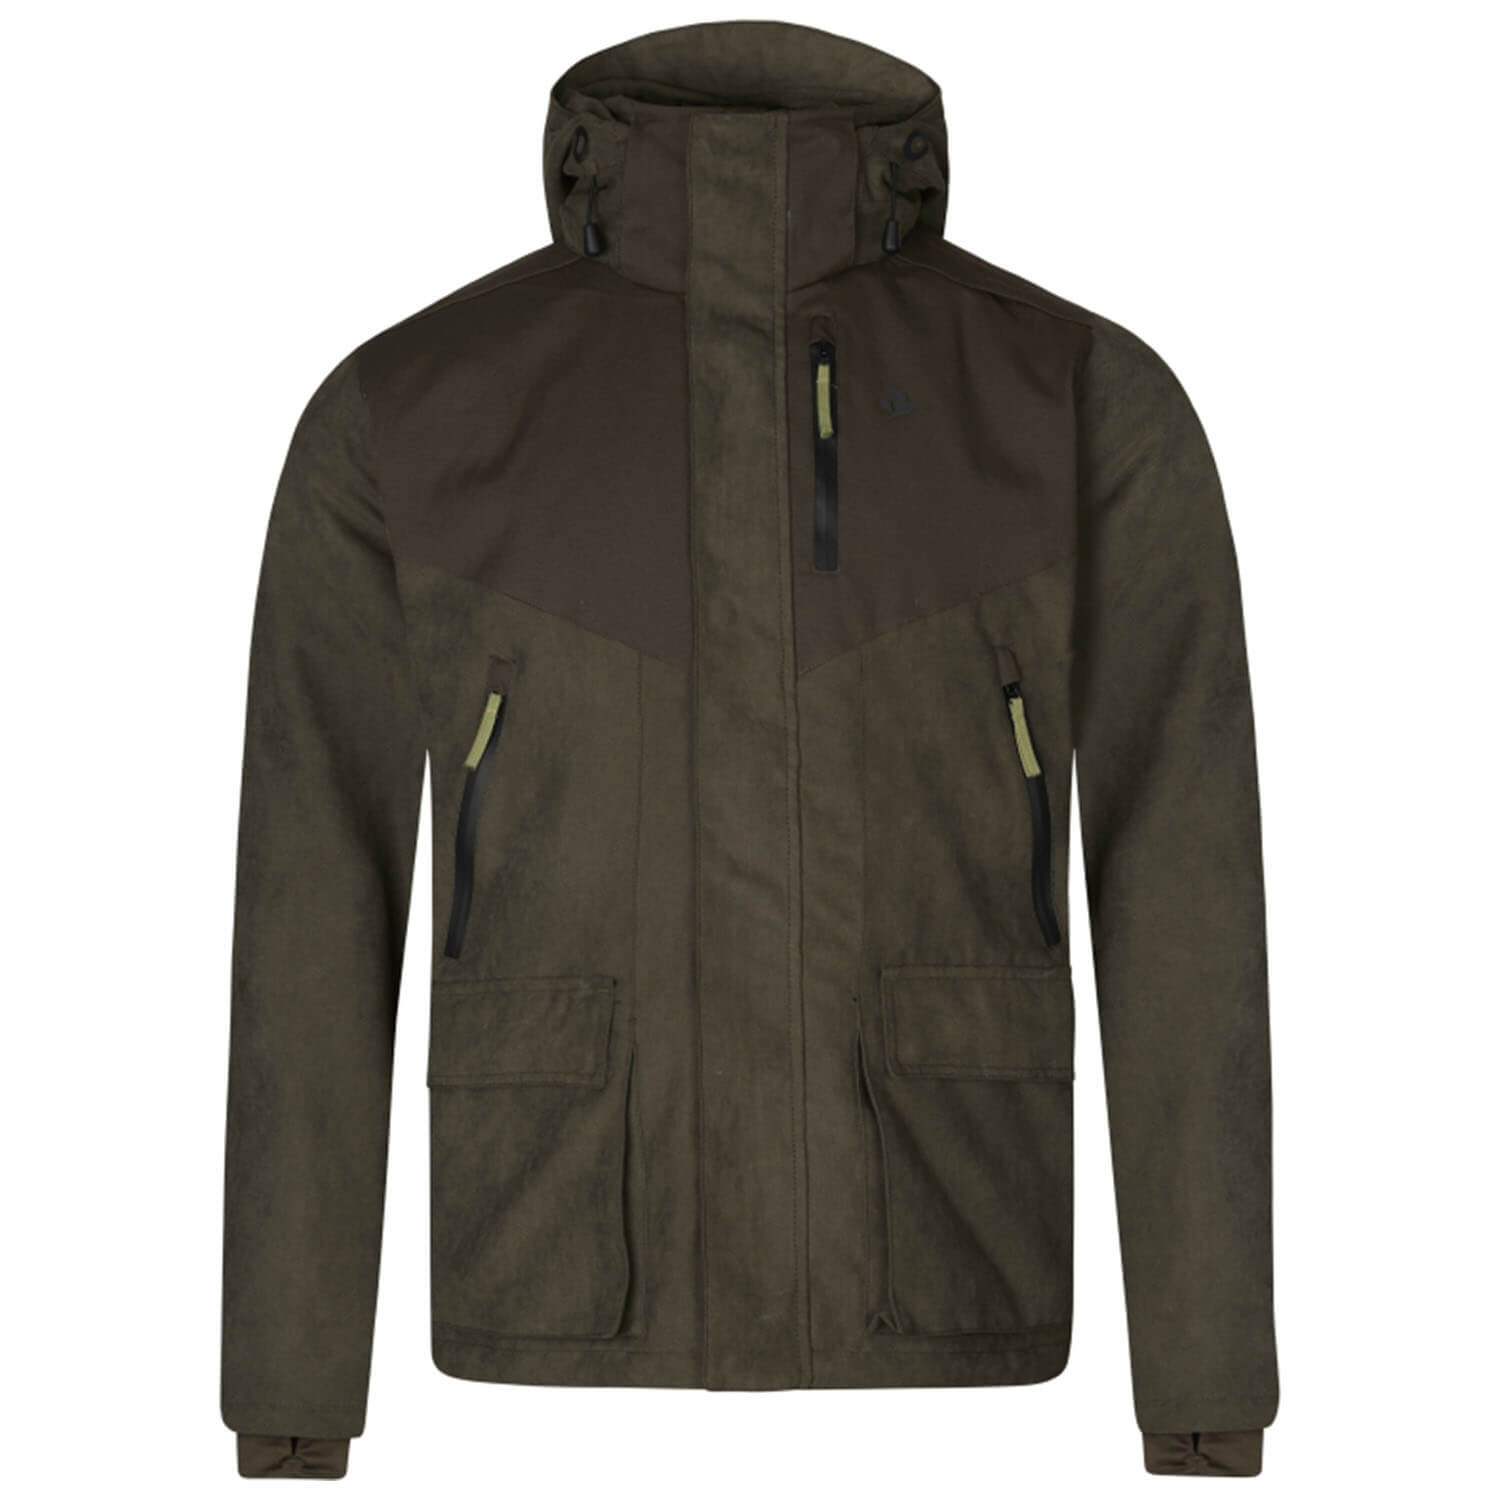 Seeland Winter Jacket Helt II - Winter Hunting Clothing